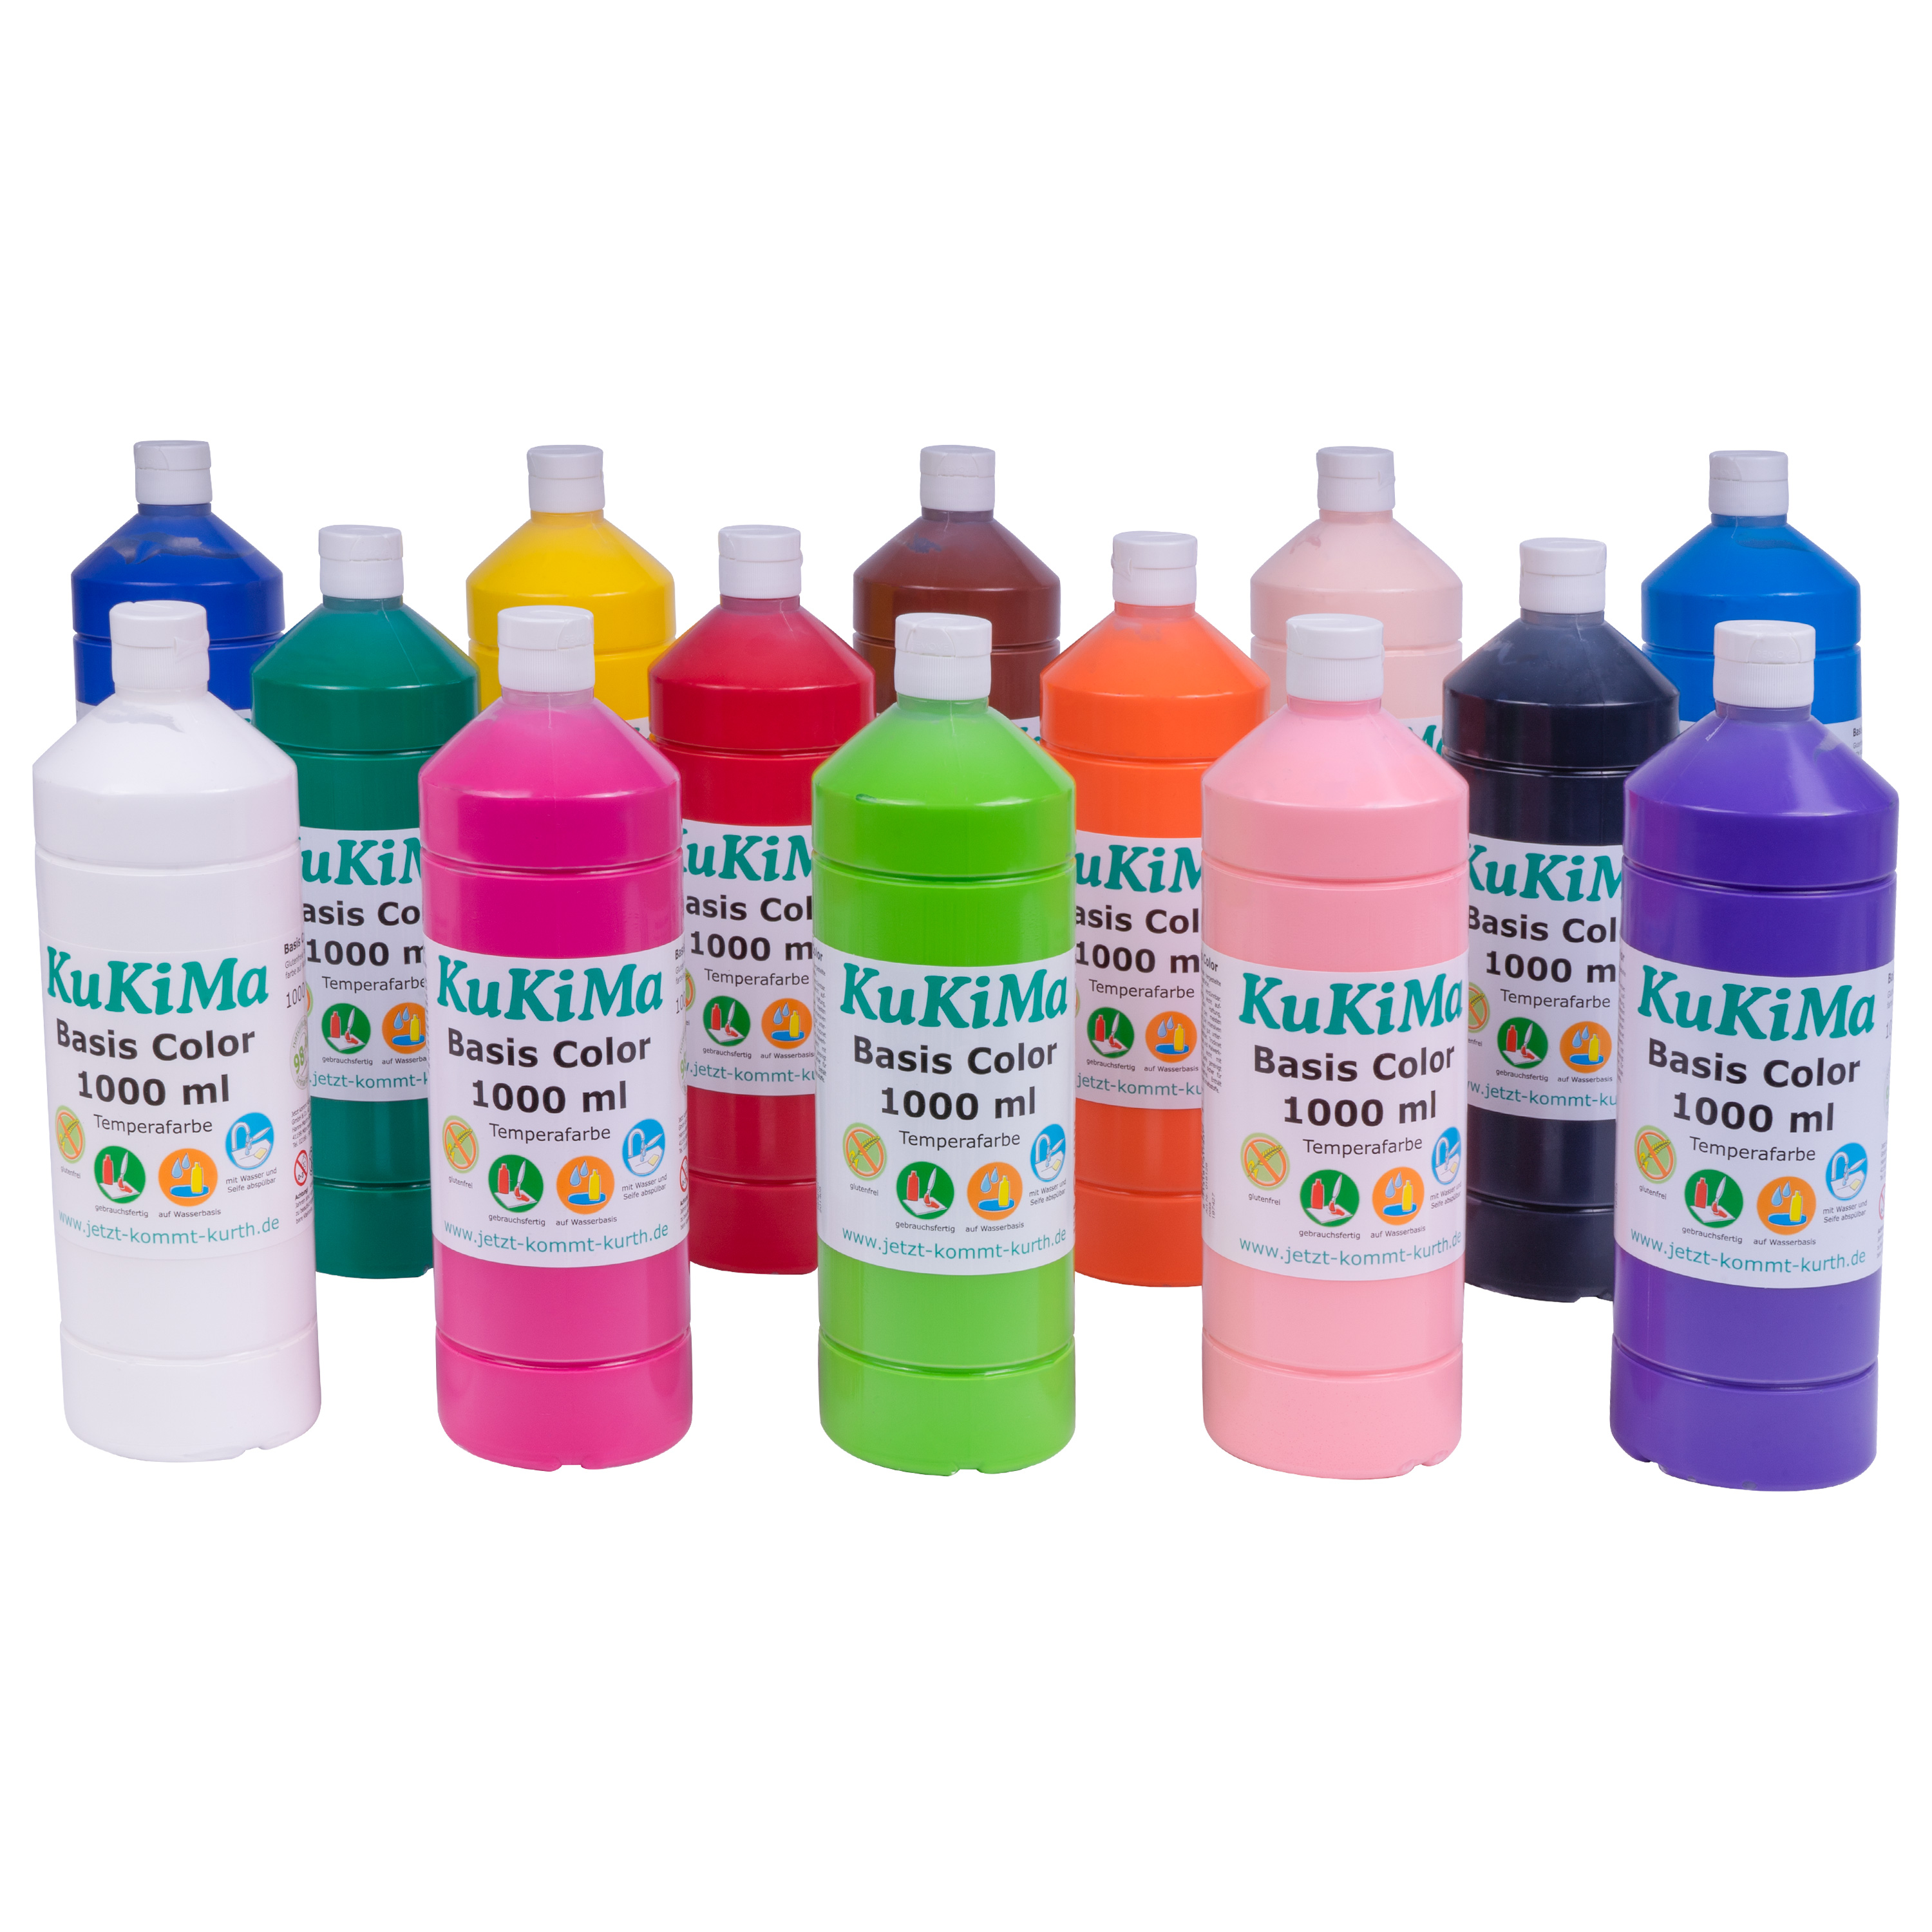 KuKiMa Basis Color in Einzelfarben, 1000 ml